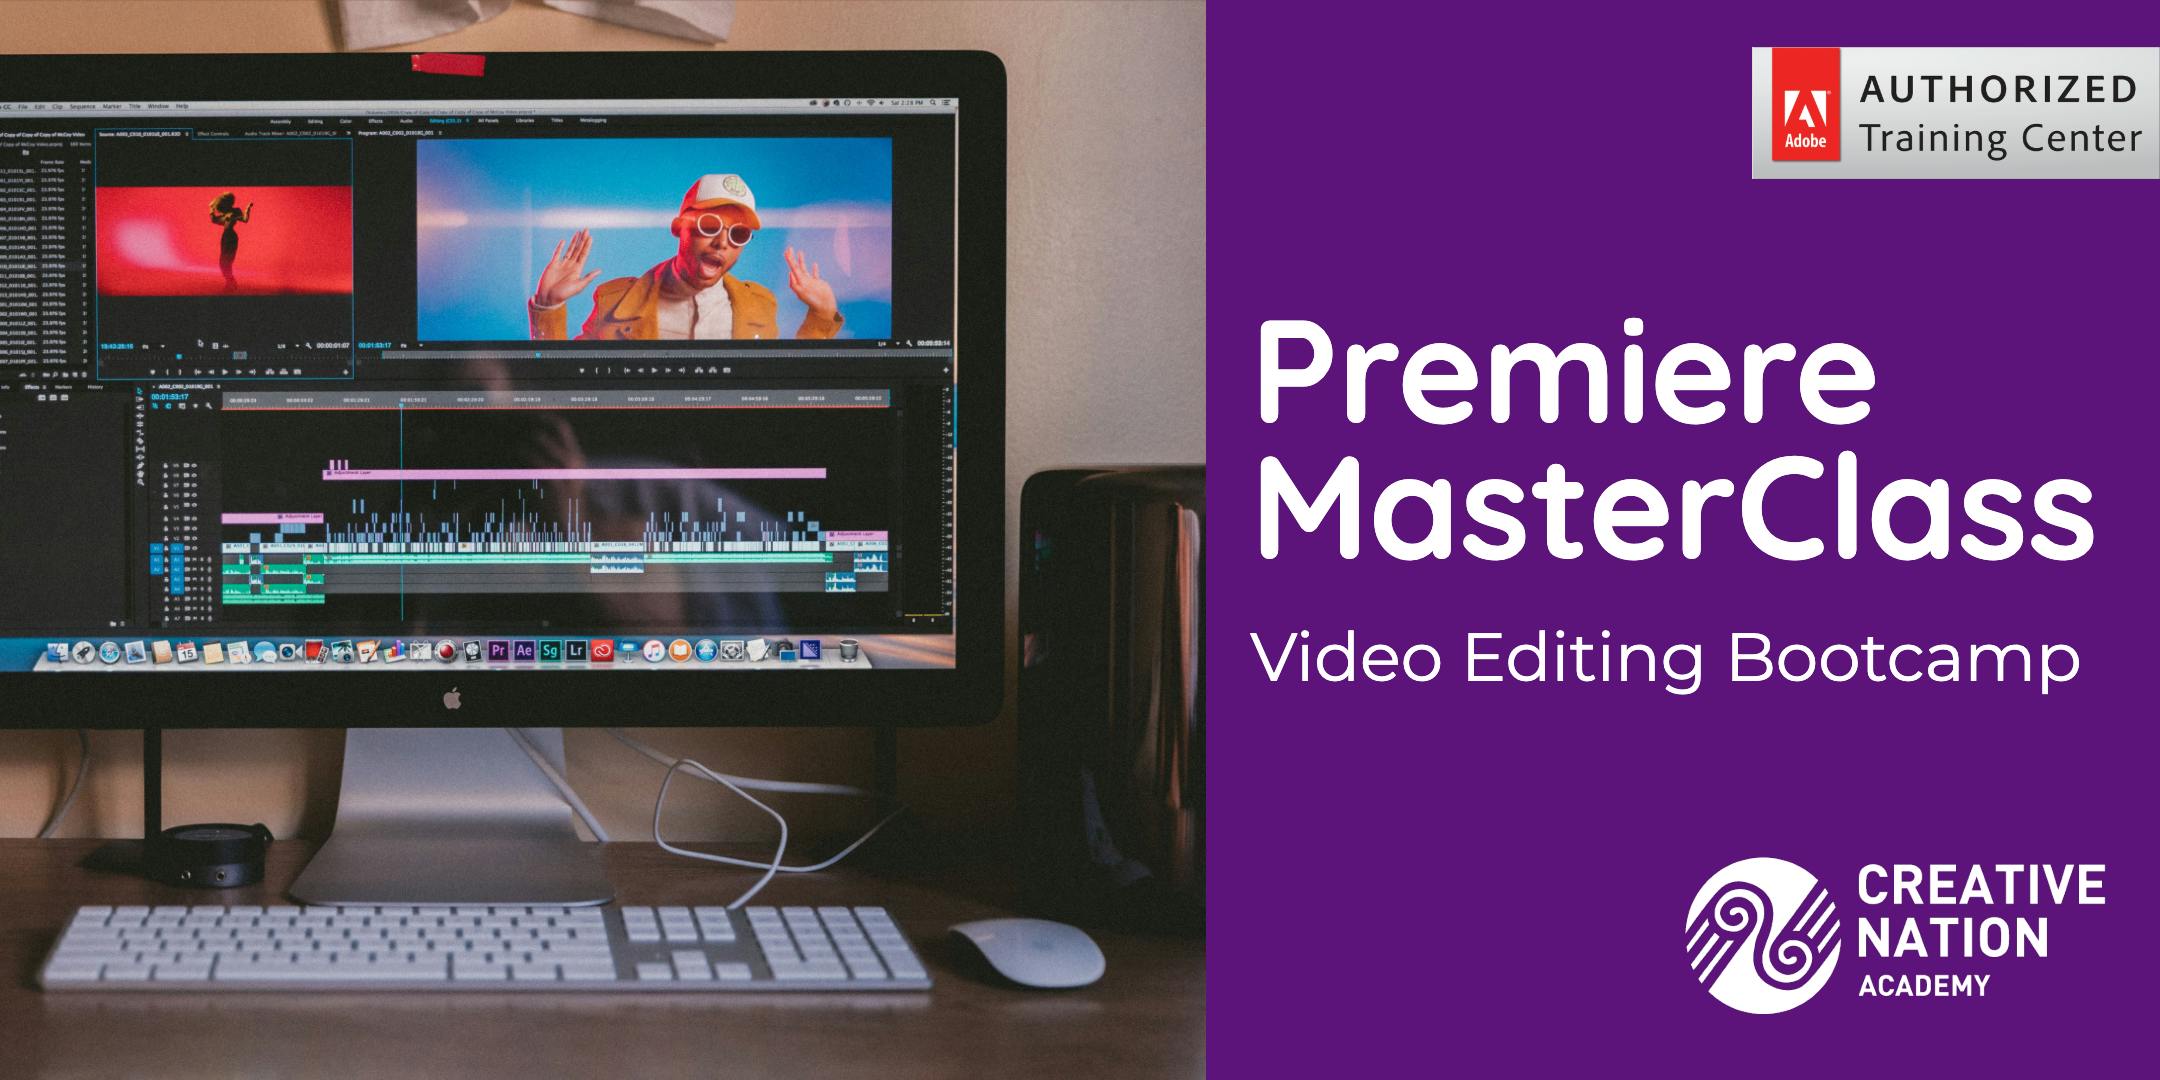 Premiere MasterClass: Video Editing Bootcamp